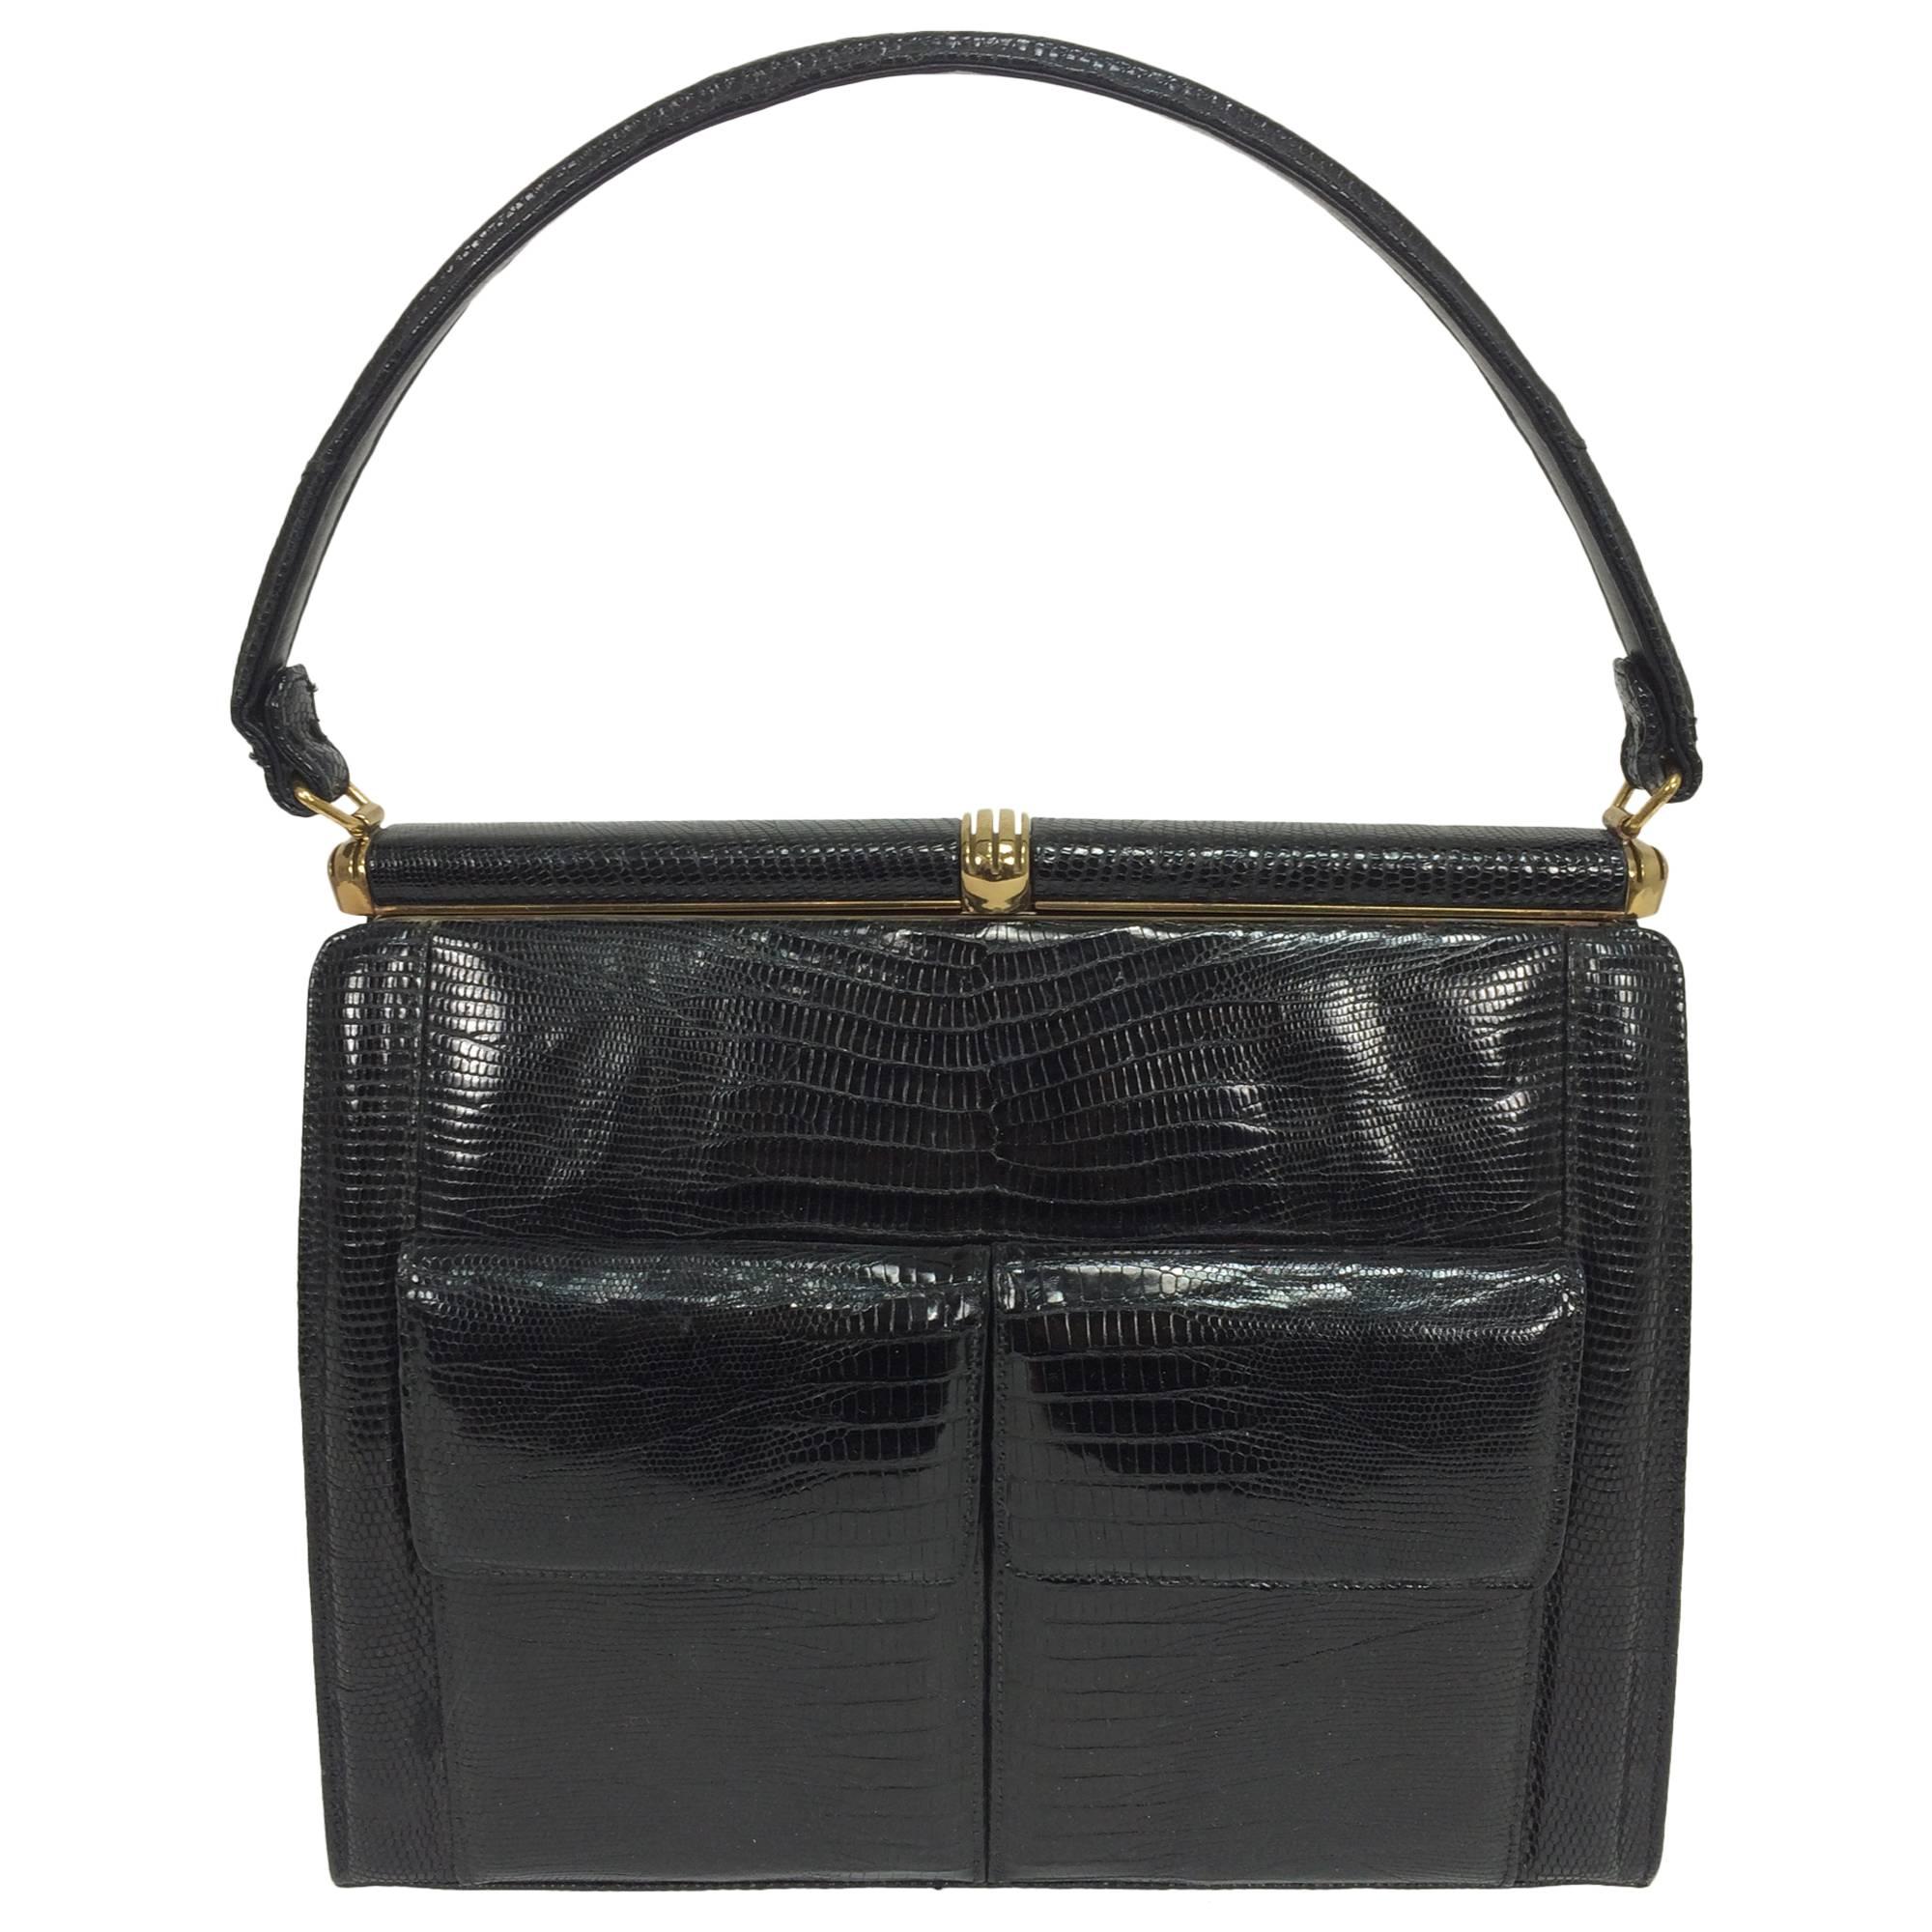 Lucille de Paris glazed black lizard frame handbag 1960s